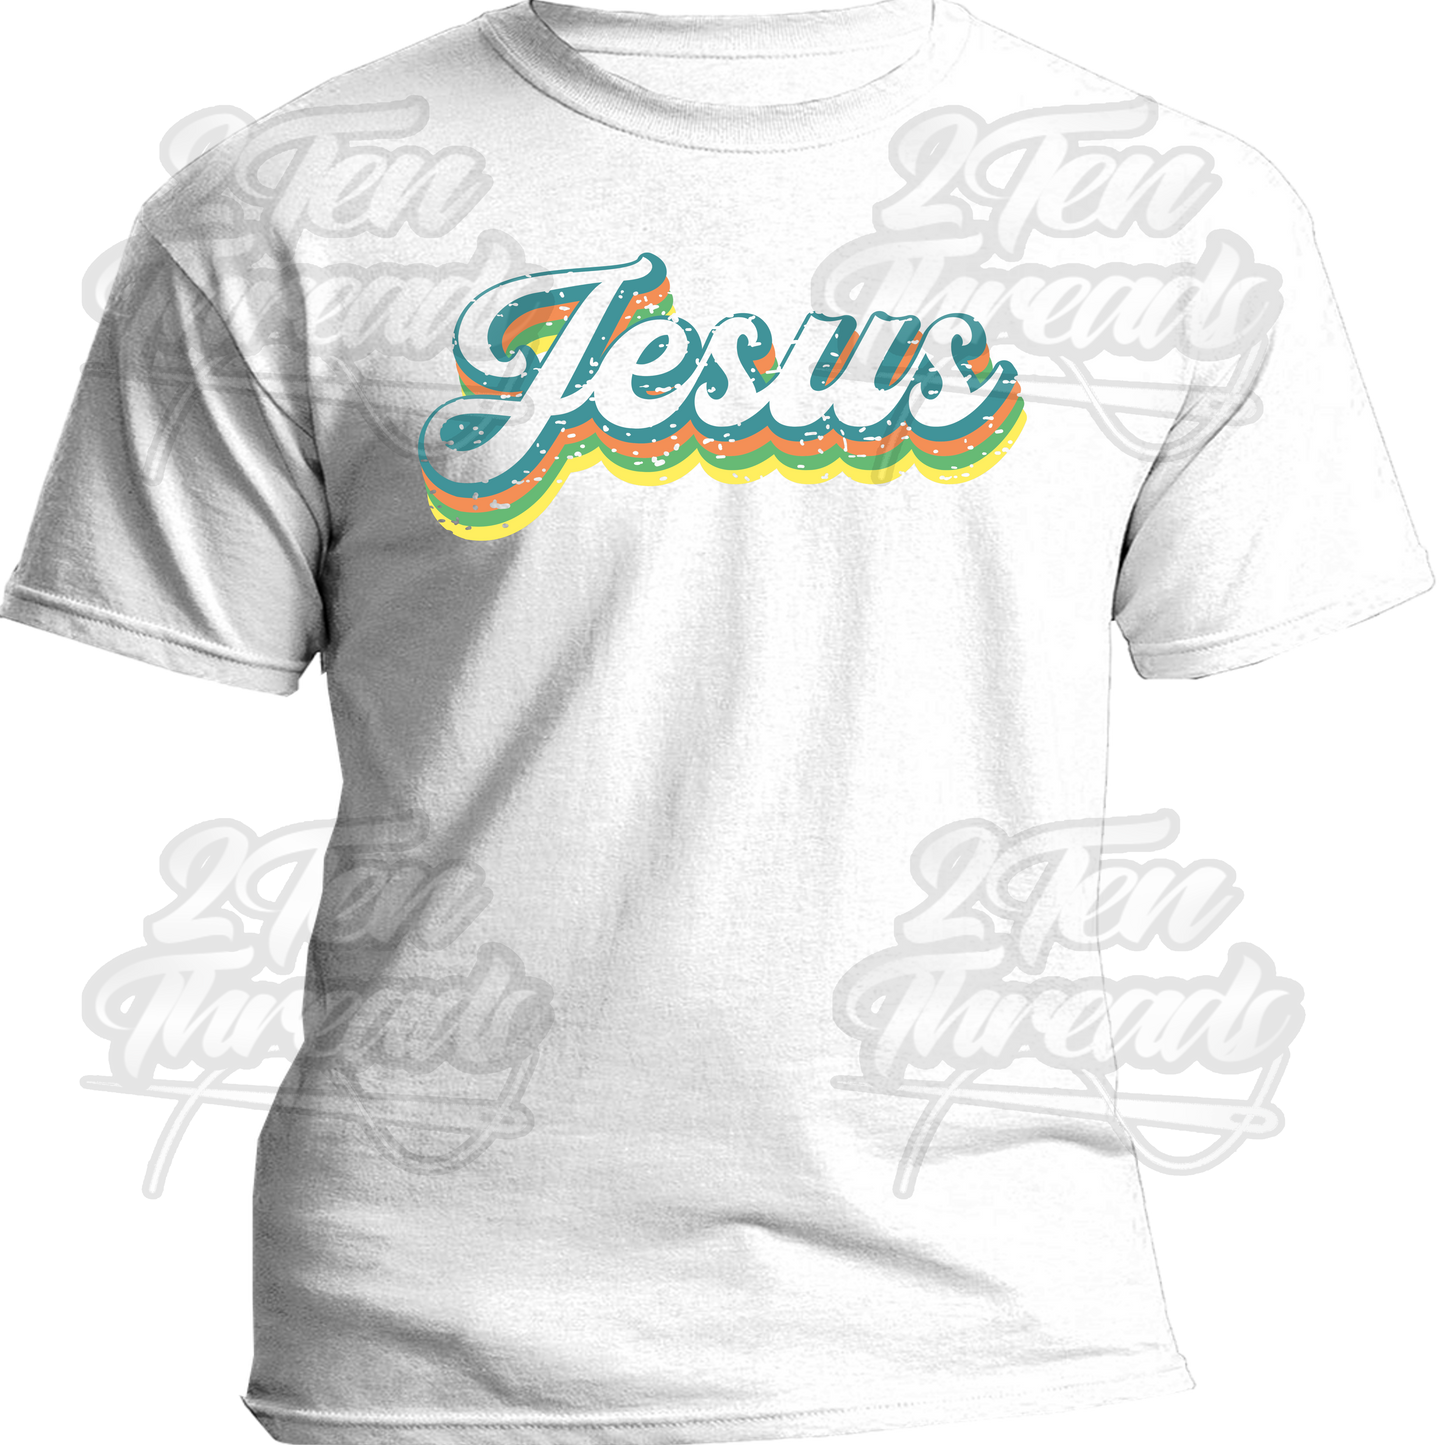 Jesus Shirt Retro